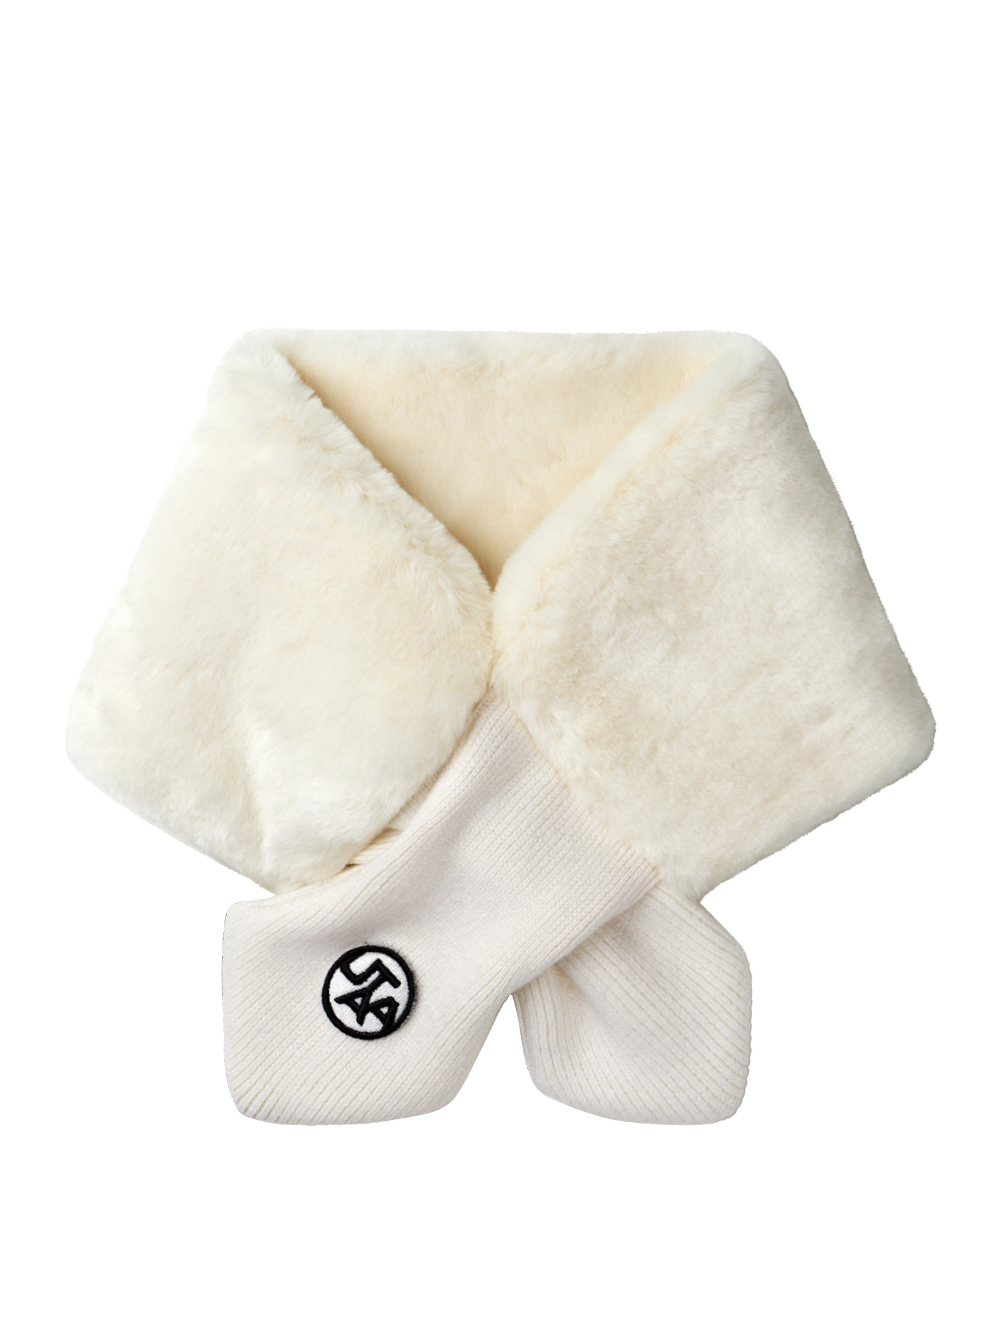 UTAA Basic Symbol Snow Fur Knit Muffler : White (UB4GXF634WH)